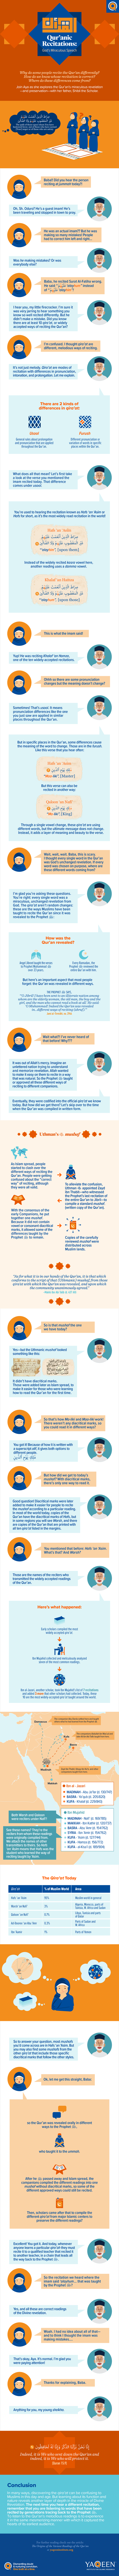 Infographic on Qur'anic recitations. 